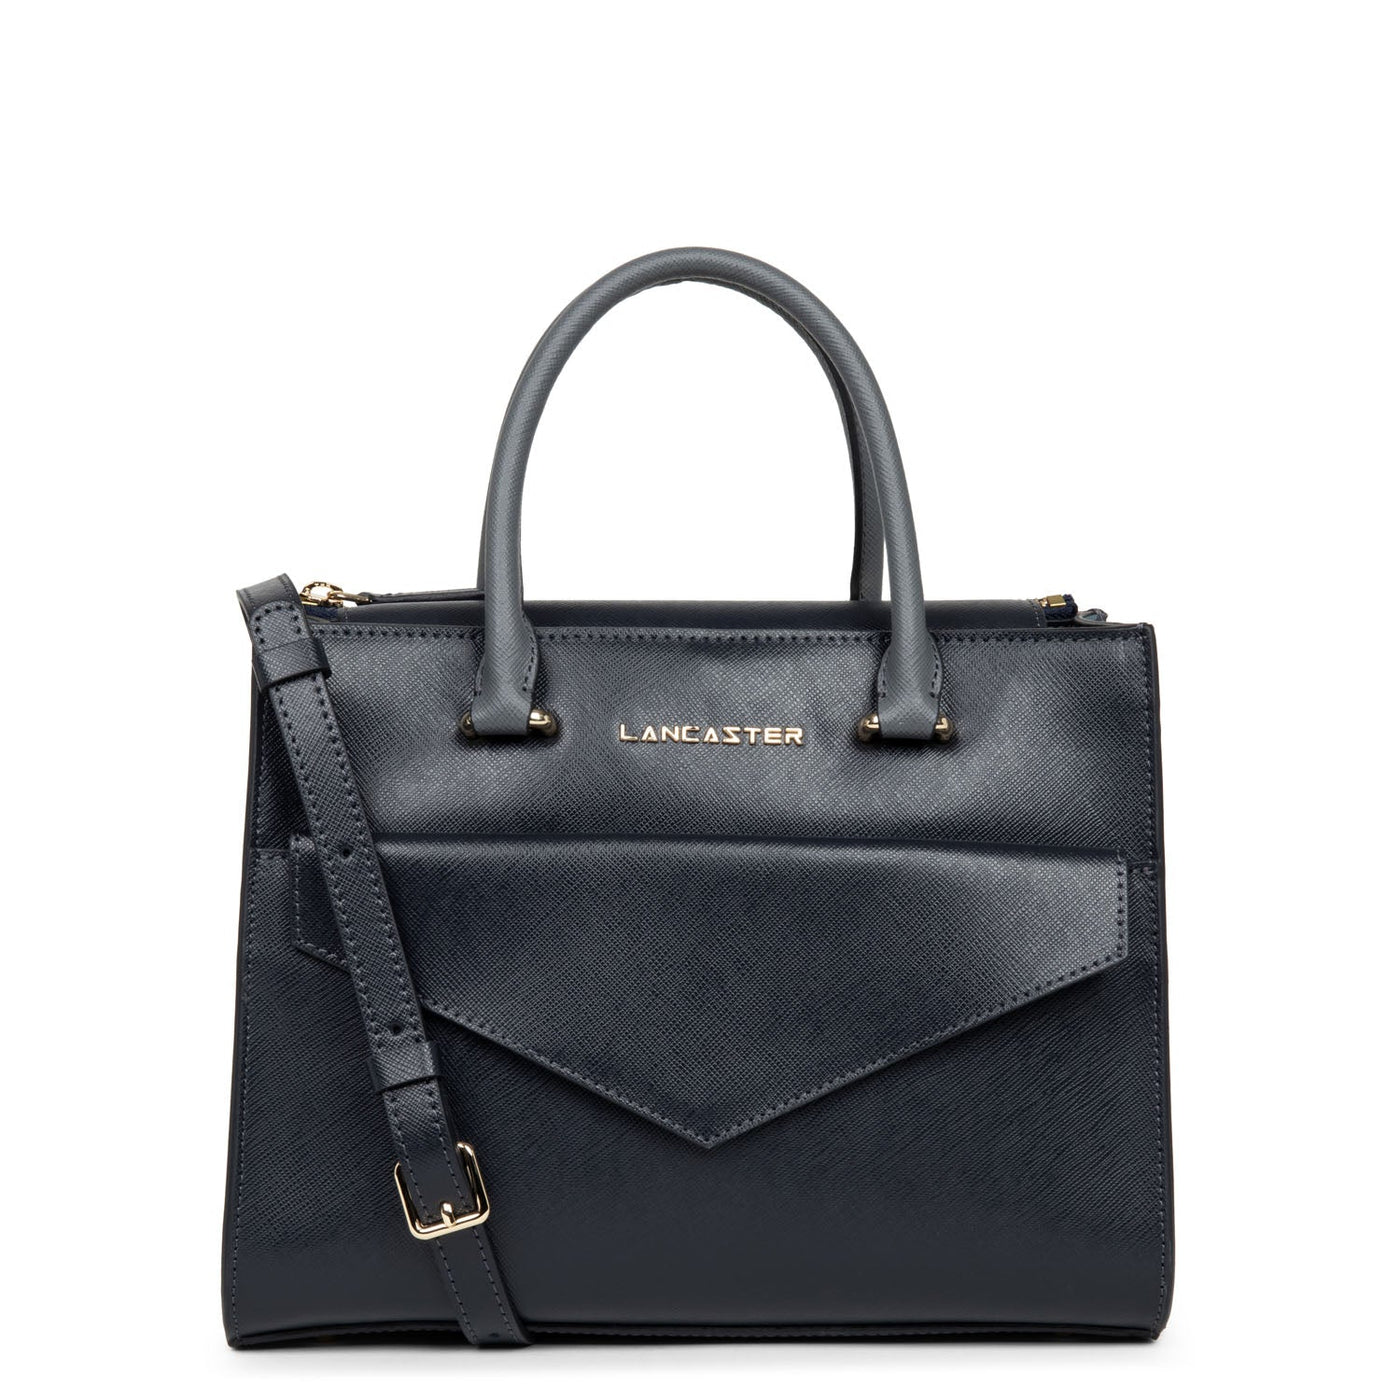 handbag - saffiano signature #couleur_bleu-fonce-bleu-ardoise-gris